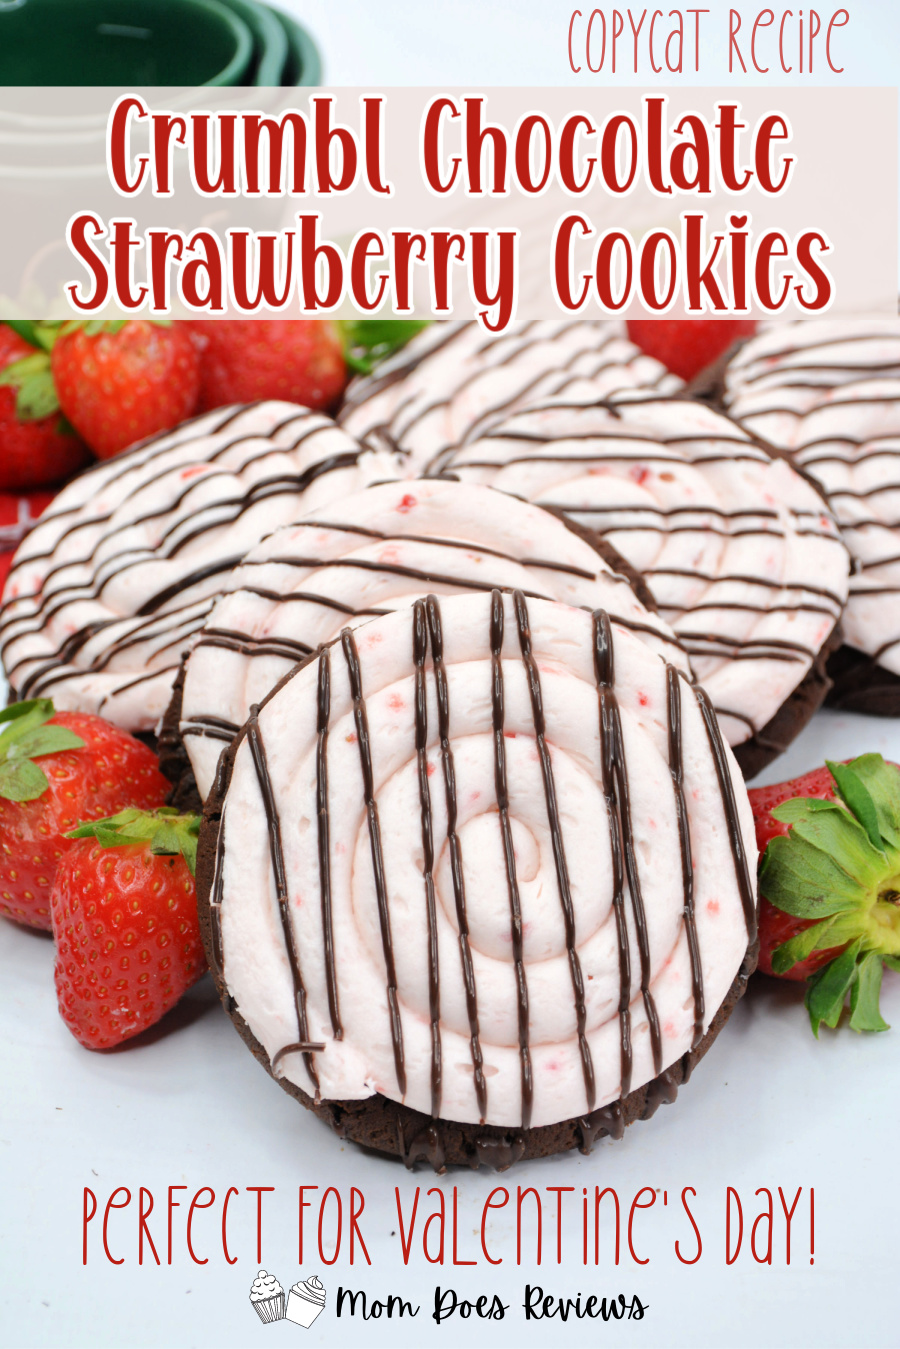 Copycat Crumbl Chocolate Strawberry Cookies 